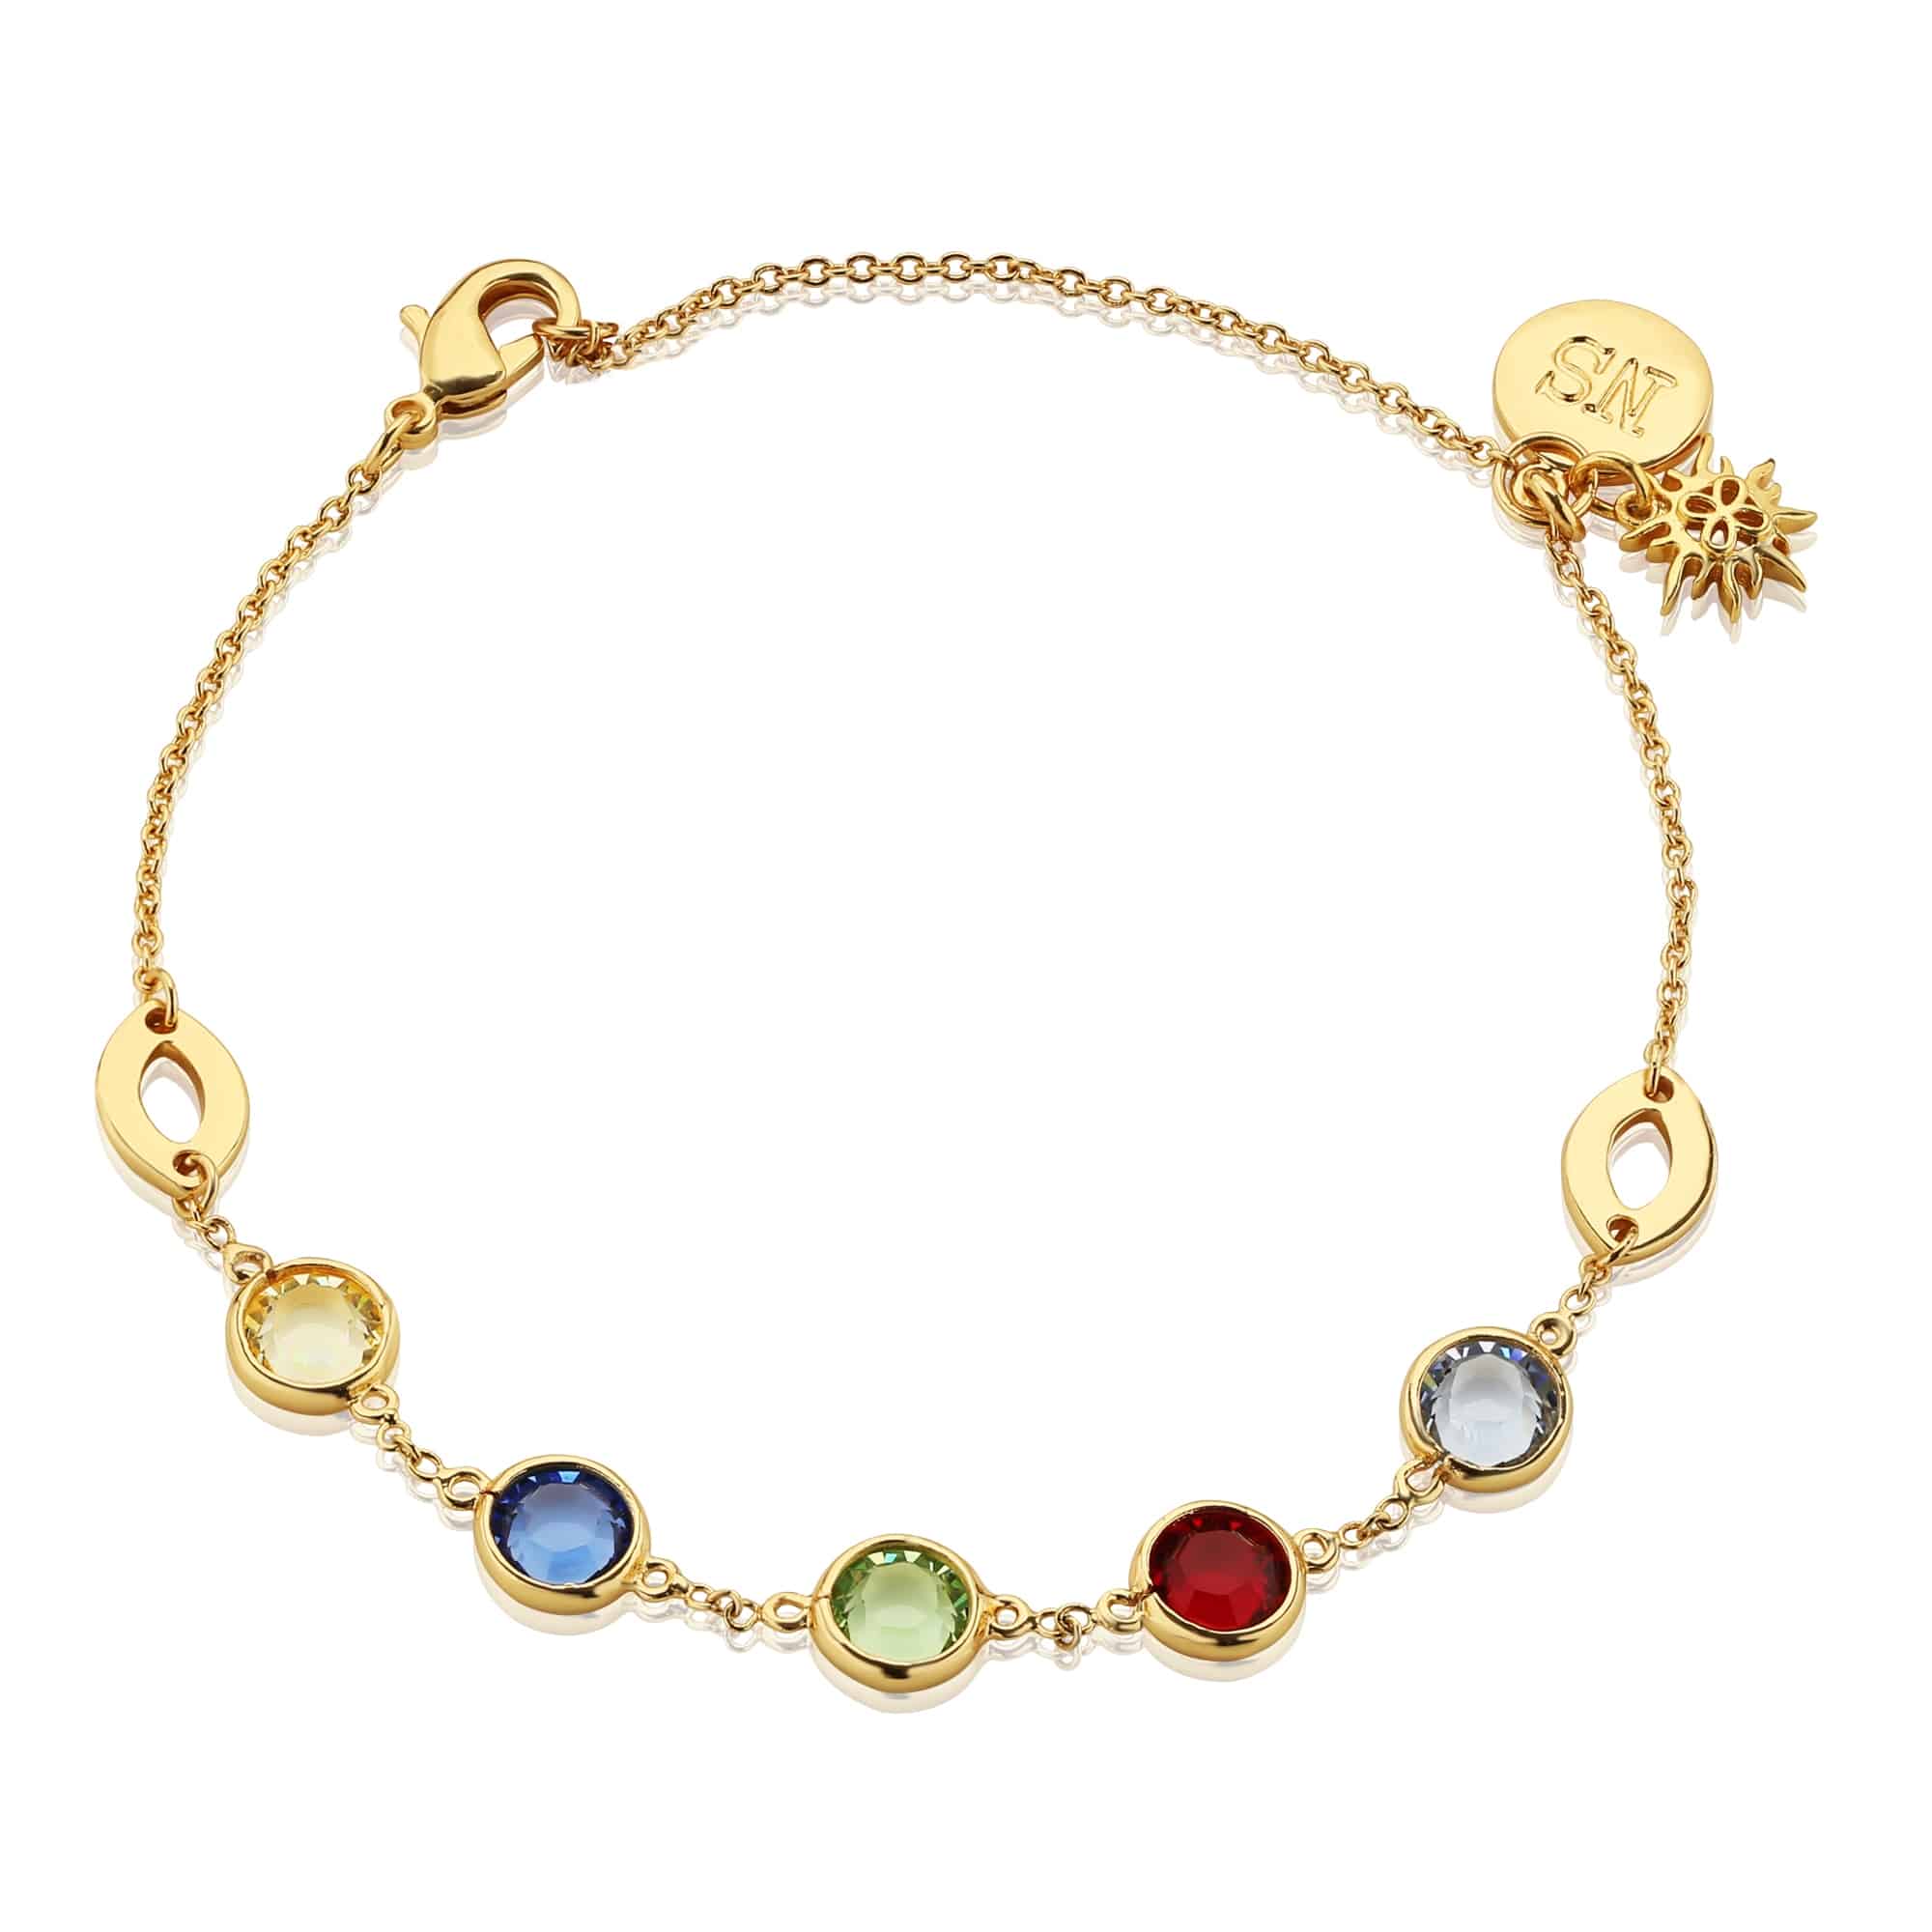 Bracelet with Multi Coloured Stones